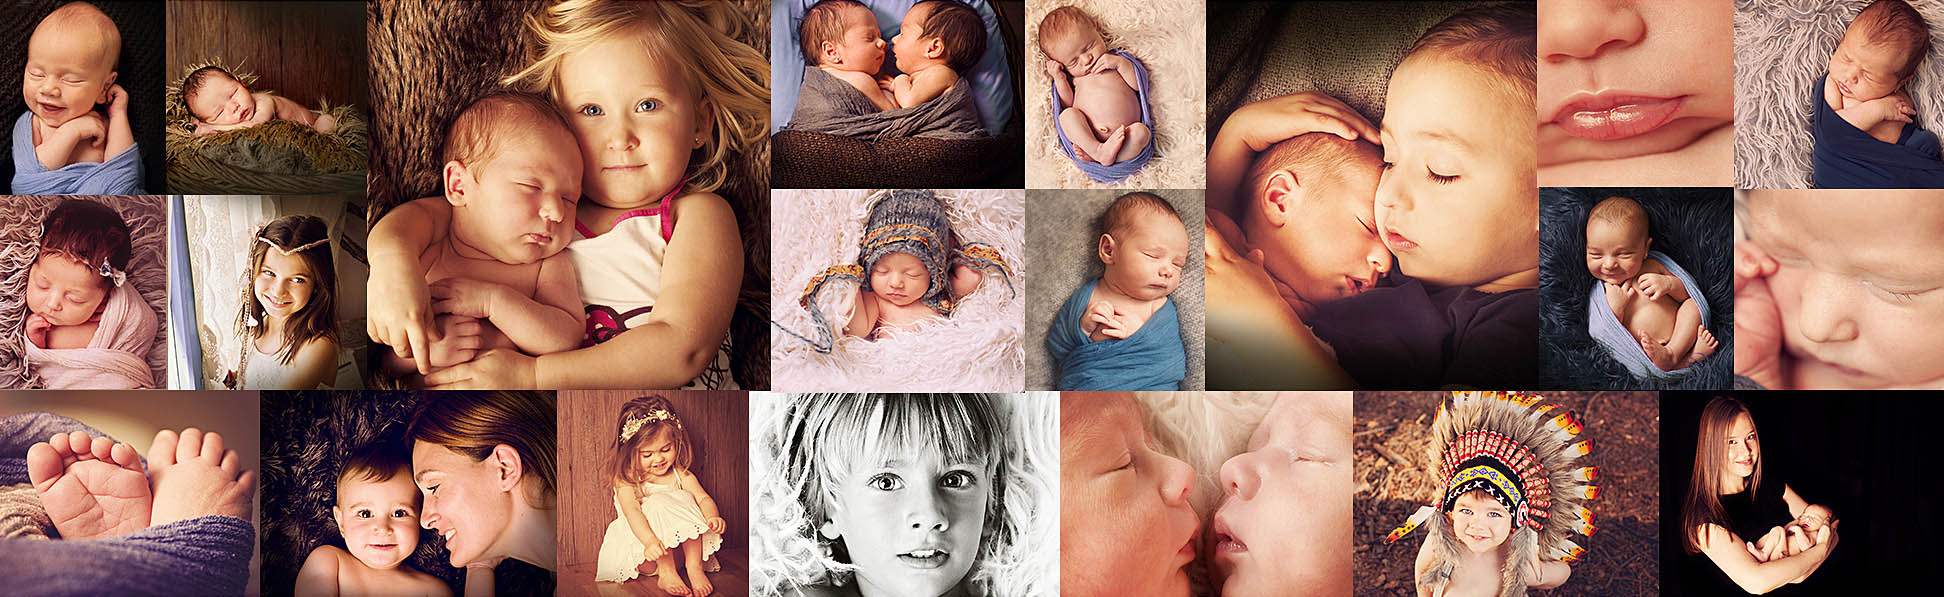 fotos de bebes recien nacidos fotos bebes recien nacidos fotos recien nacidos fotos de recien nacidos fotografos barcelona fotografia creativa, fotos de bebes recien nacidos